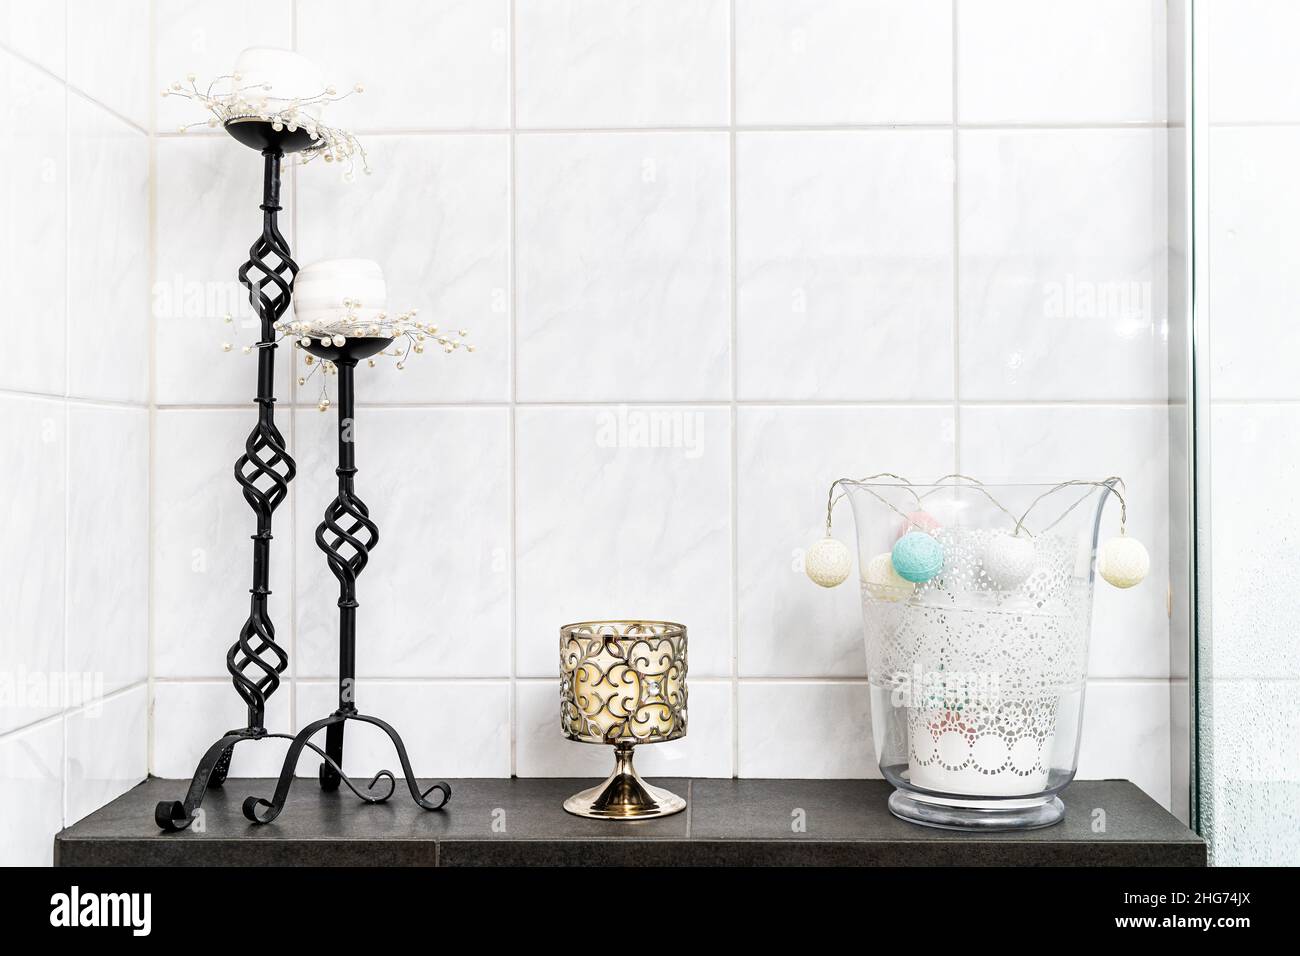 https://c8.alamy.com/comp/2HG74JX/white-bathroom-tiles-tiled-wall-interior-bright-natural-light-design-and-candle-holder-object-candelabra-decorations-modern-contemporary-on-shelf-tabl-2HG74JX.jpg